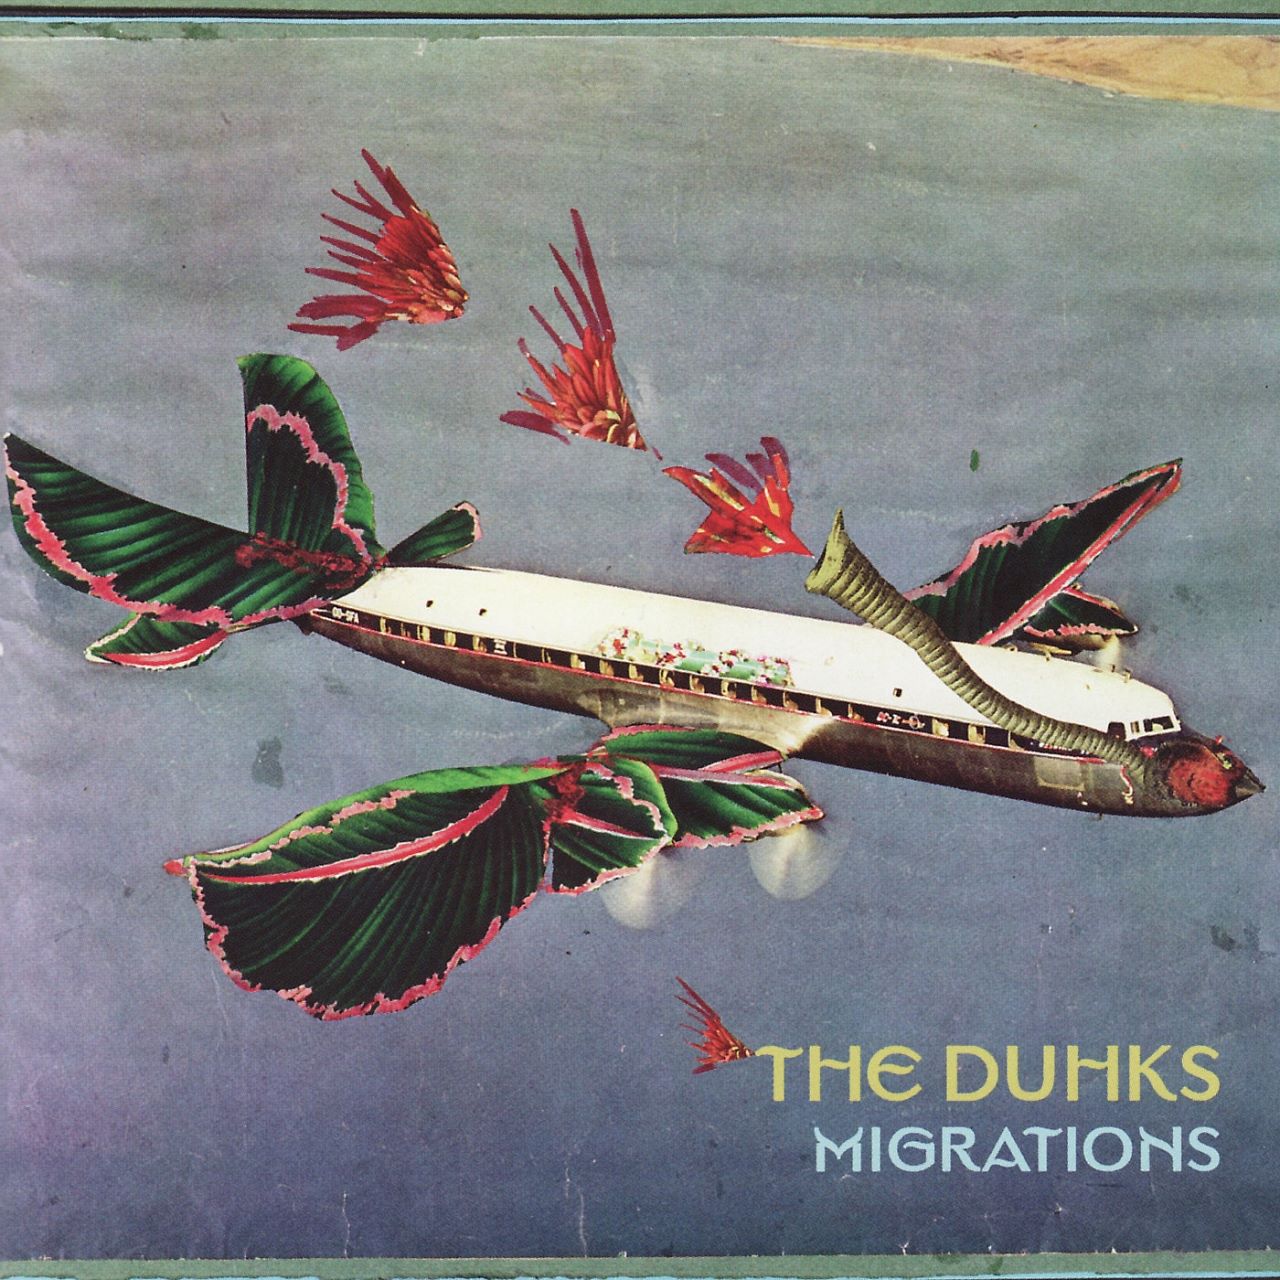 Duhks - Migrations cover album